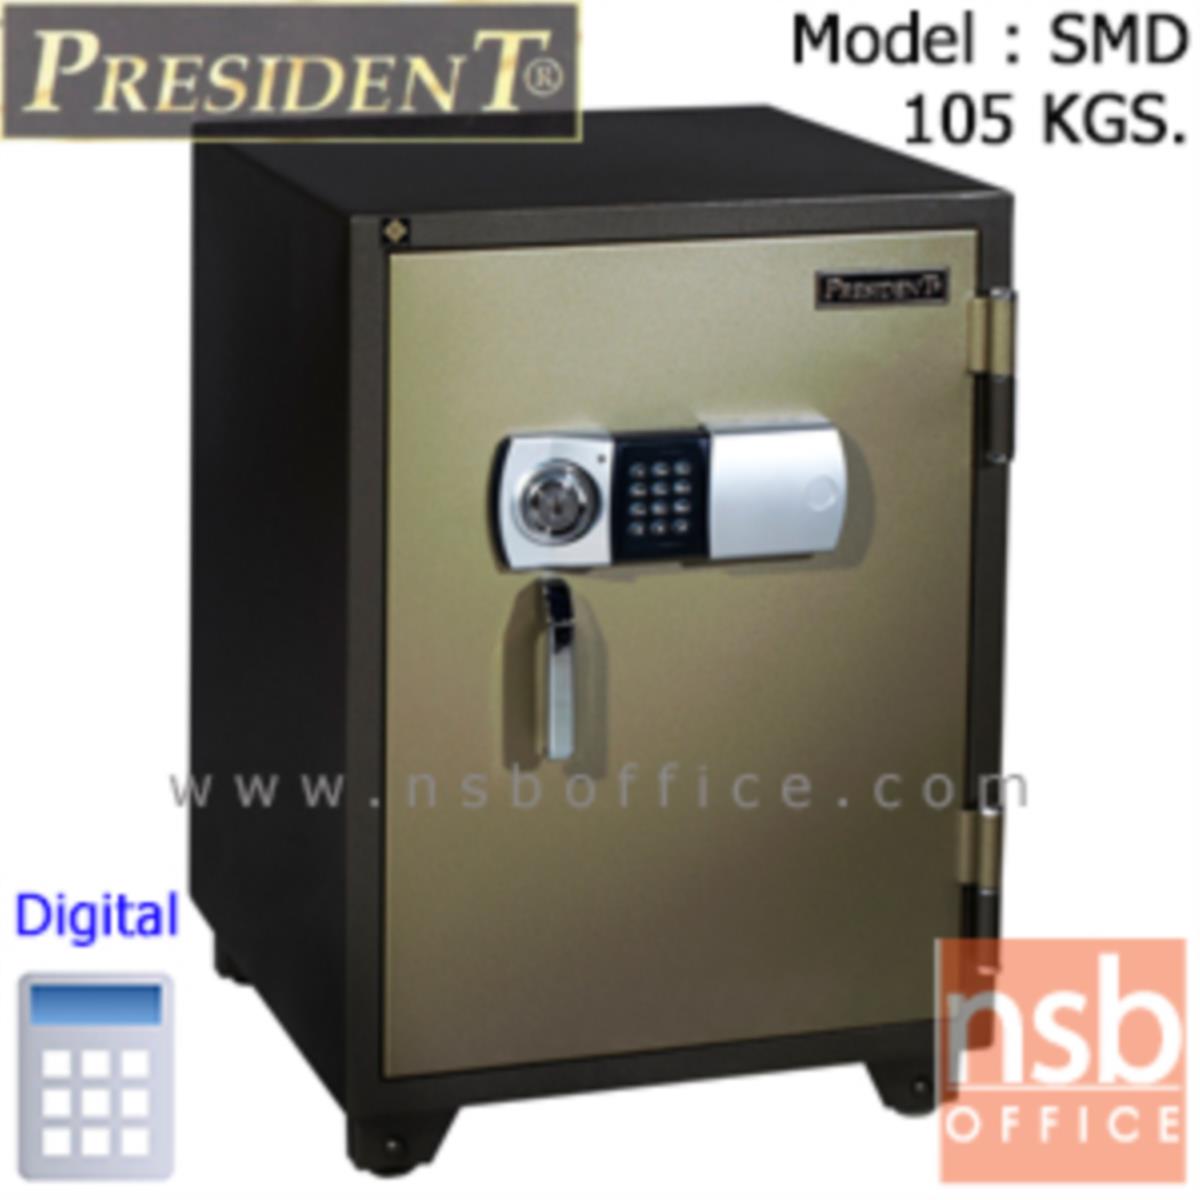 F05A012: ตู้เซฟดิจิตอล 105 กก. รุ่น PRESIDENT-SMD  มี 1 กุญแจ 1 รหัส (รหัสกด digital)